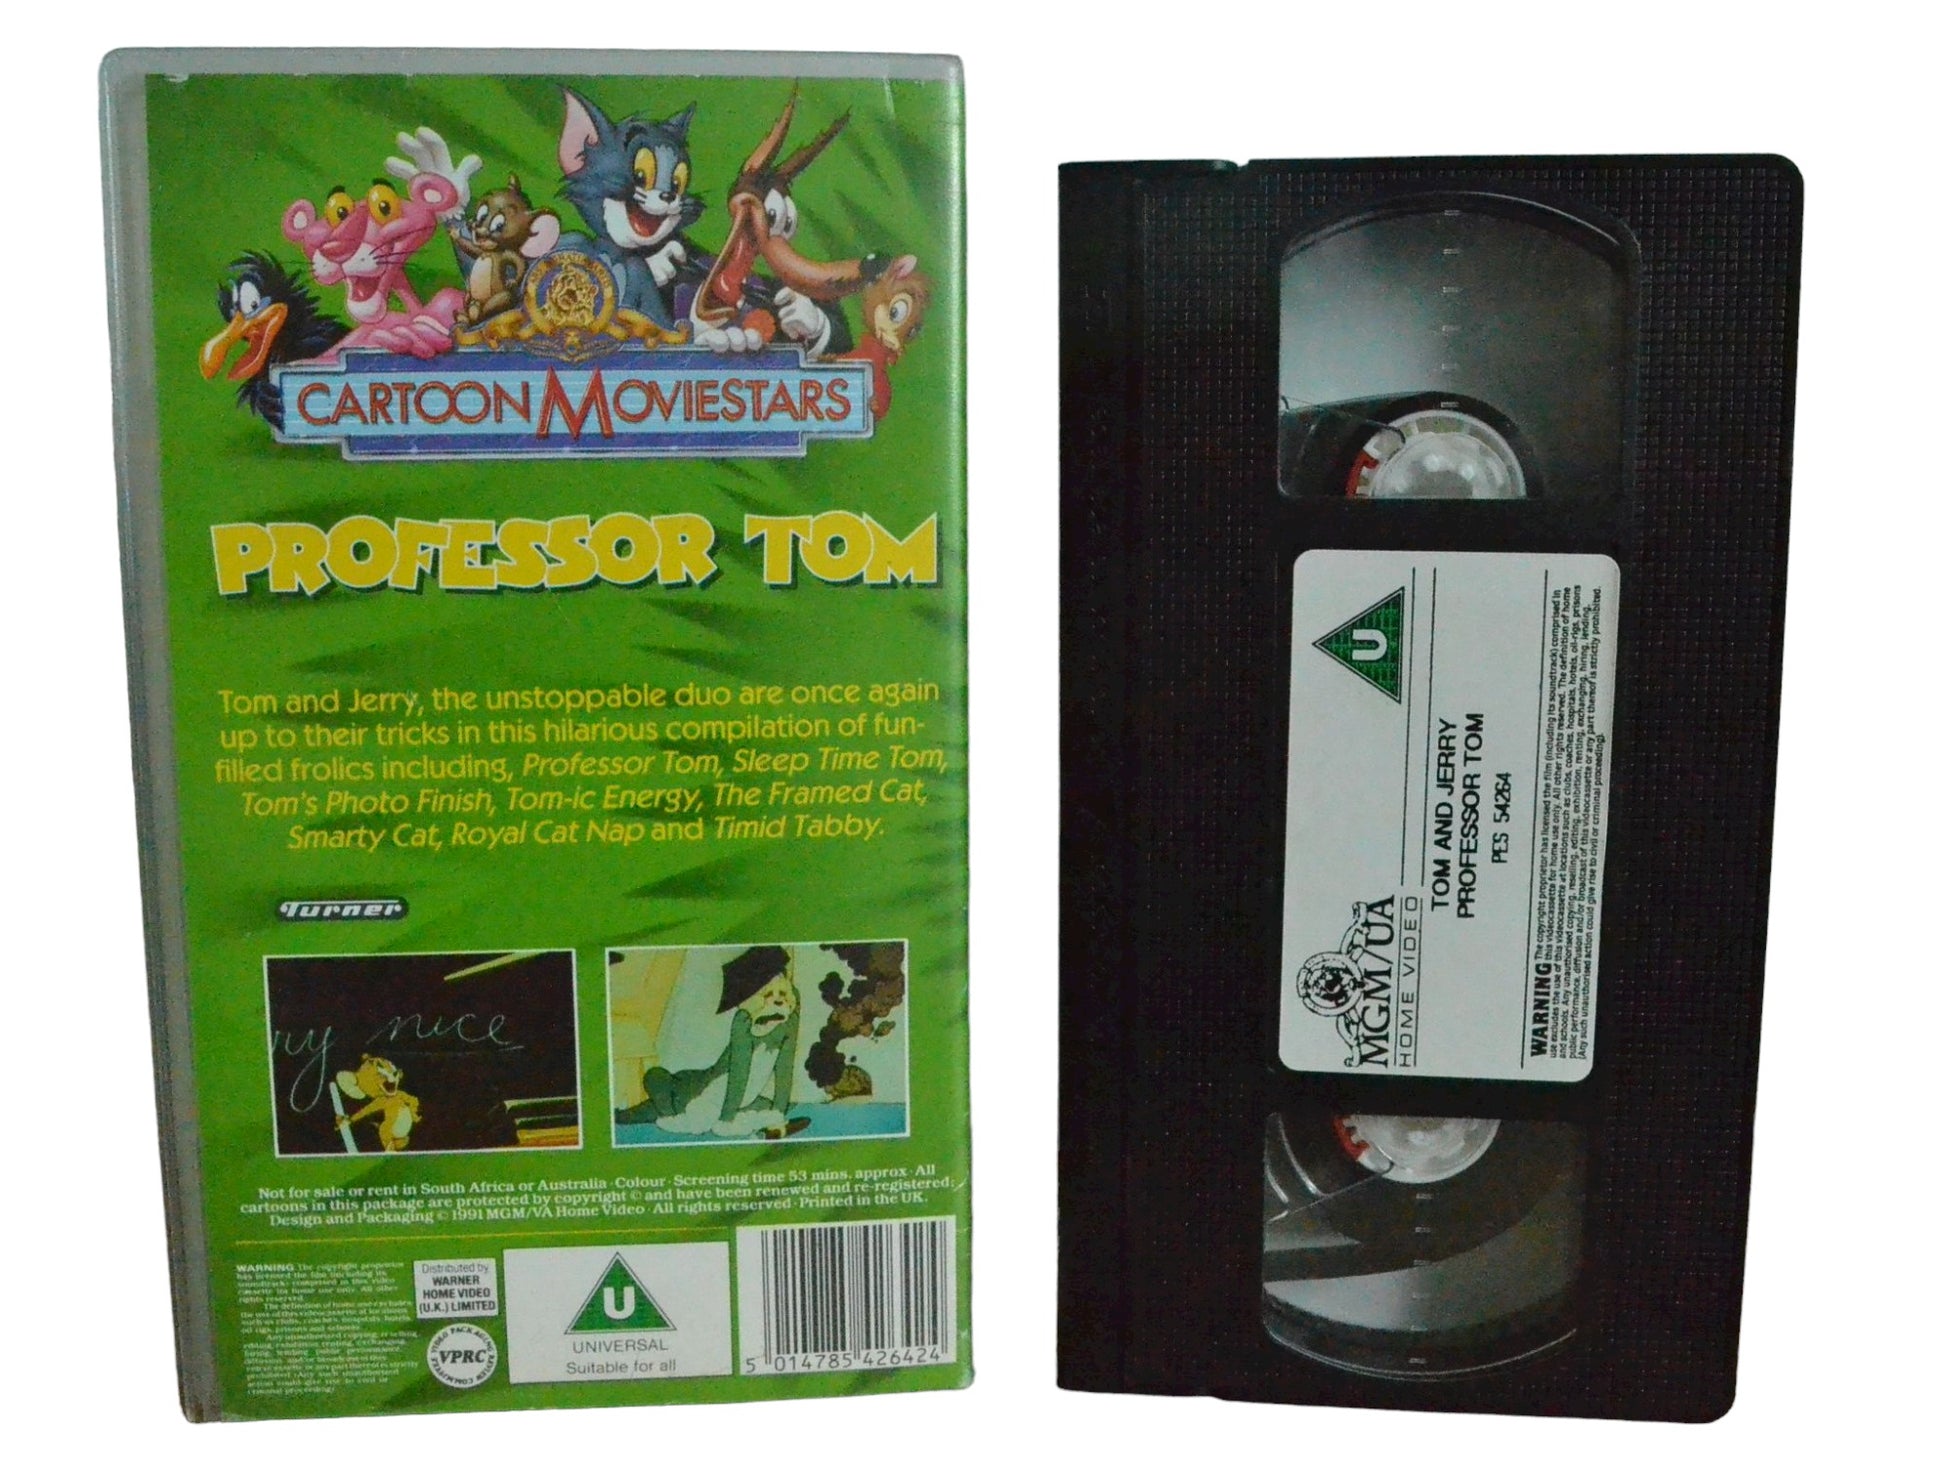 Tom and Jerry Professor Tom - MGM/UA Home Video - Childrens - PAL - VHS-